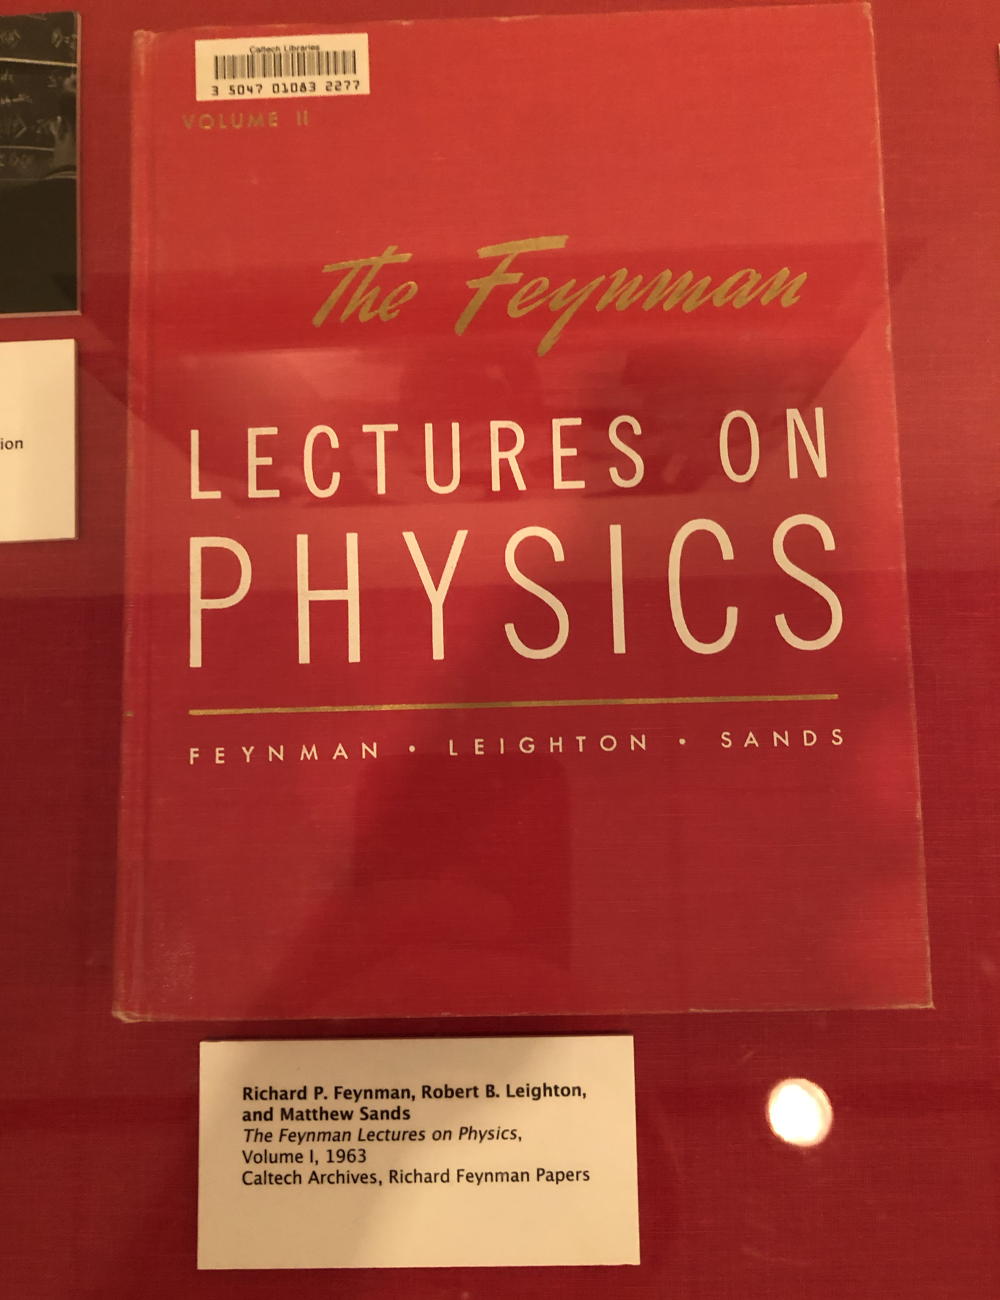 Feynman Lectures at Caltech Exhibit: The Feynman Lectures on Physics, at the Caltech Exhibit in 2019.; Richard Feynman; Caltech